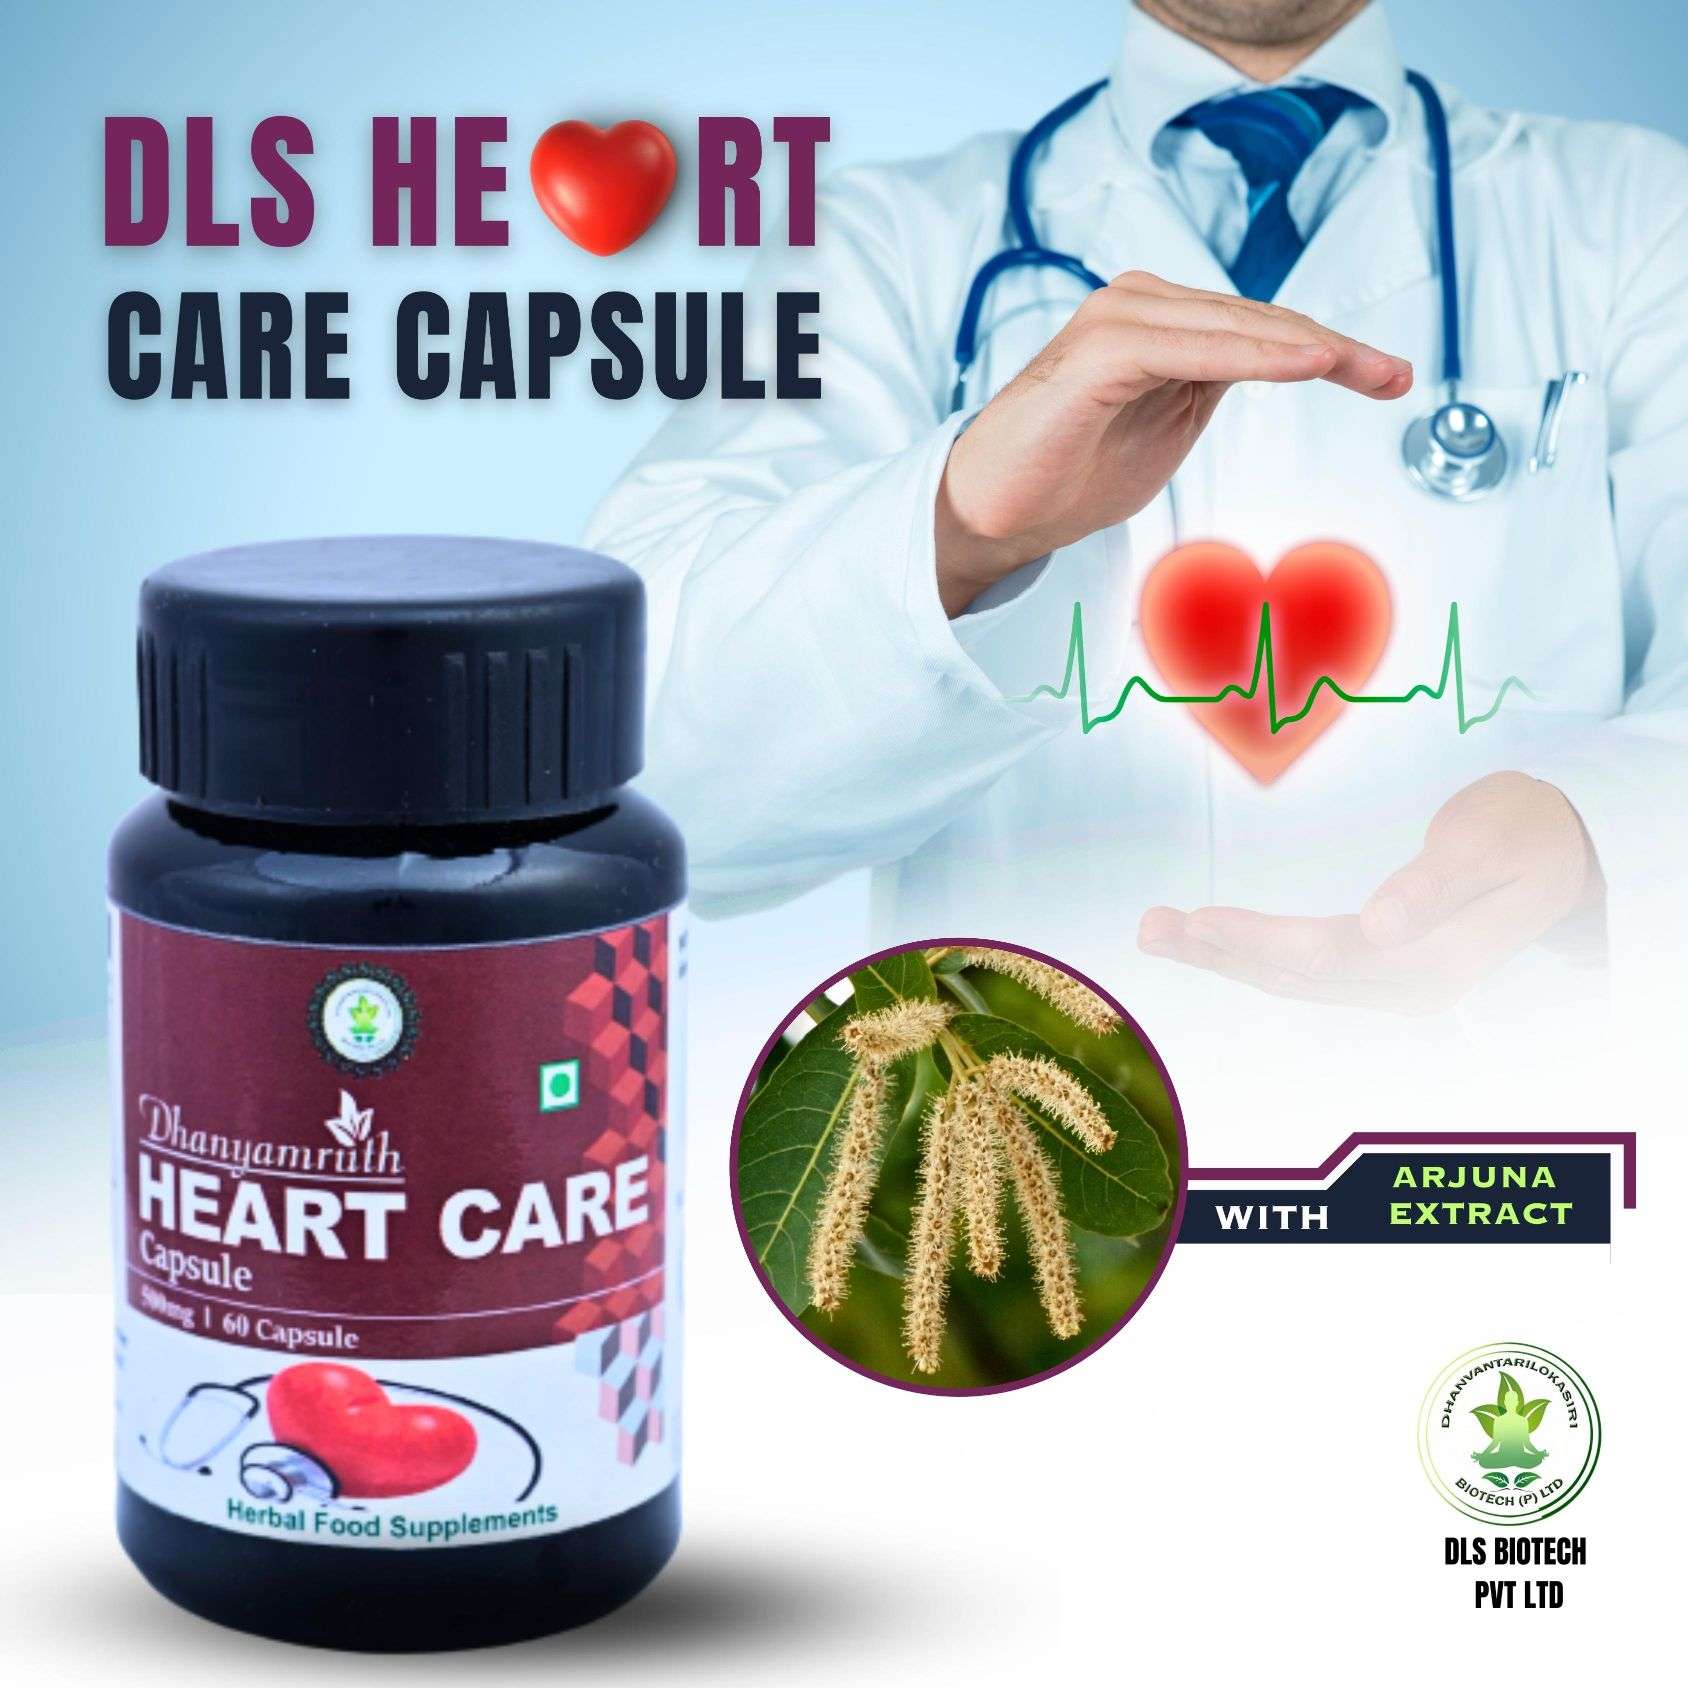 Heart care capsule